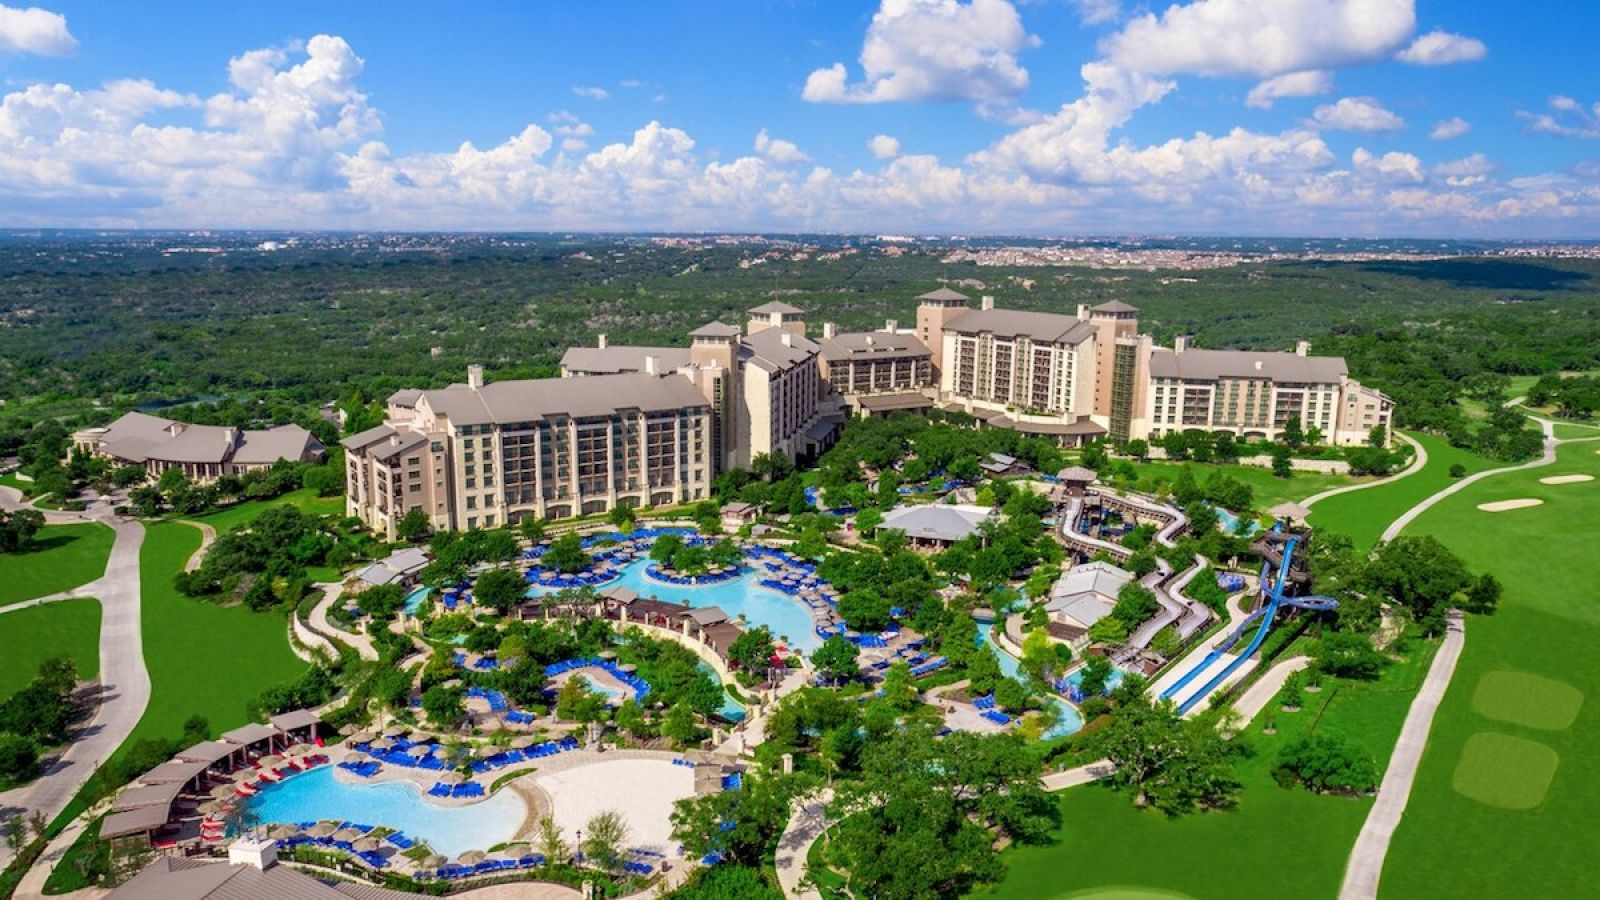 JW Marriott San Antonio Hill Country Resort & Spa - overview